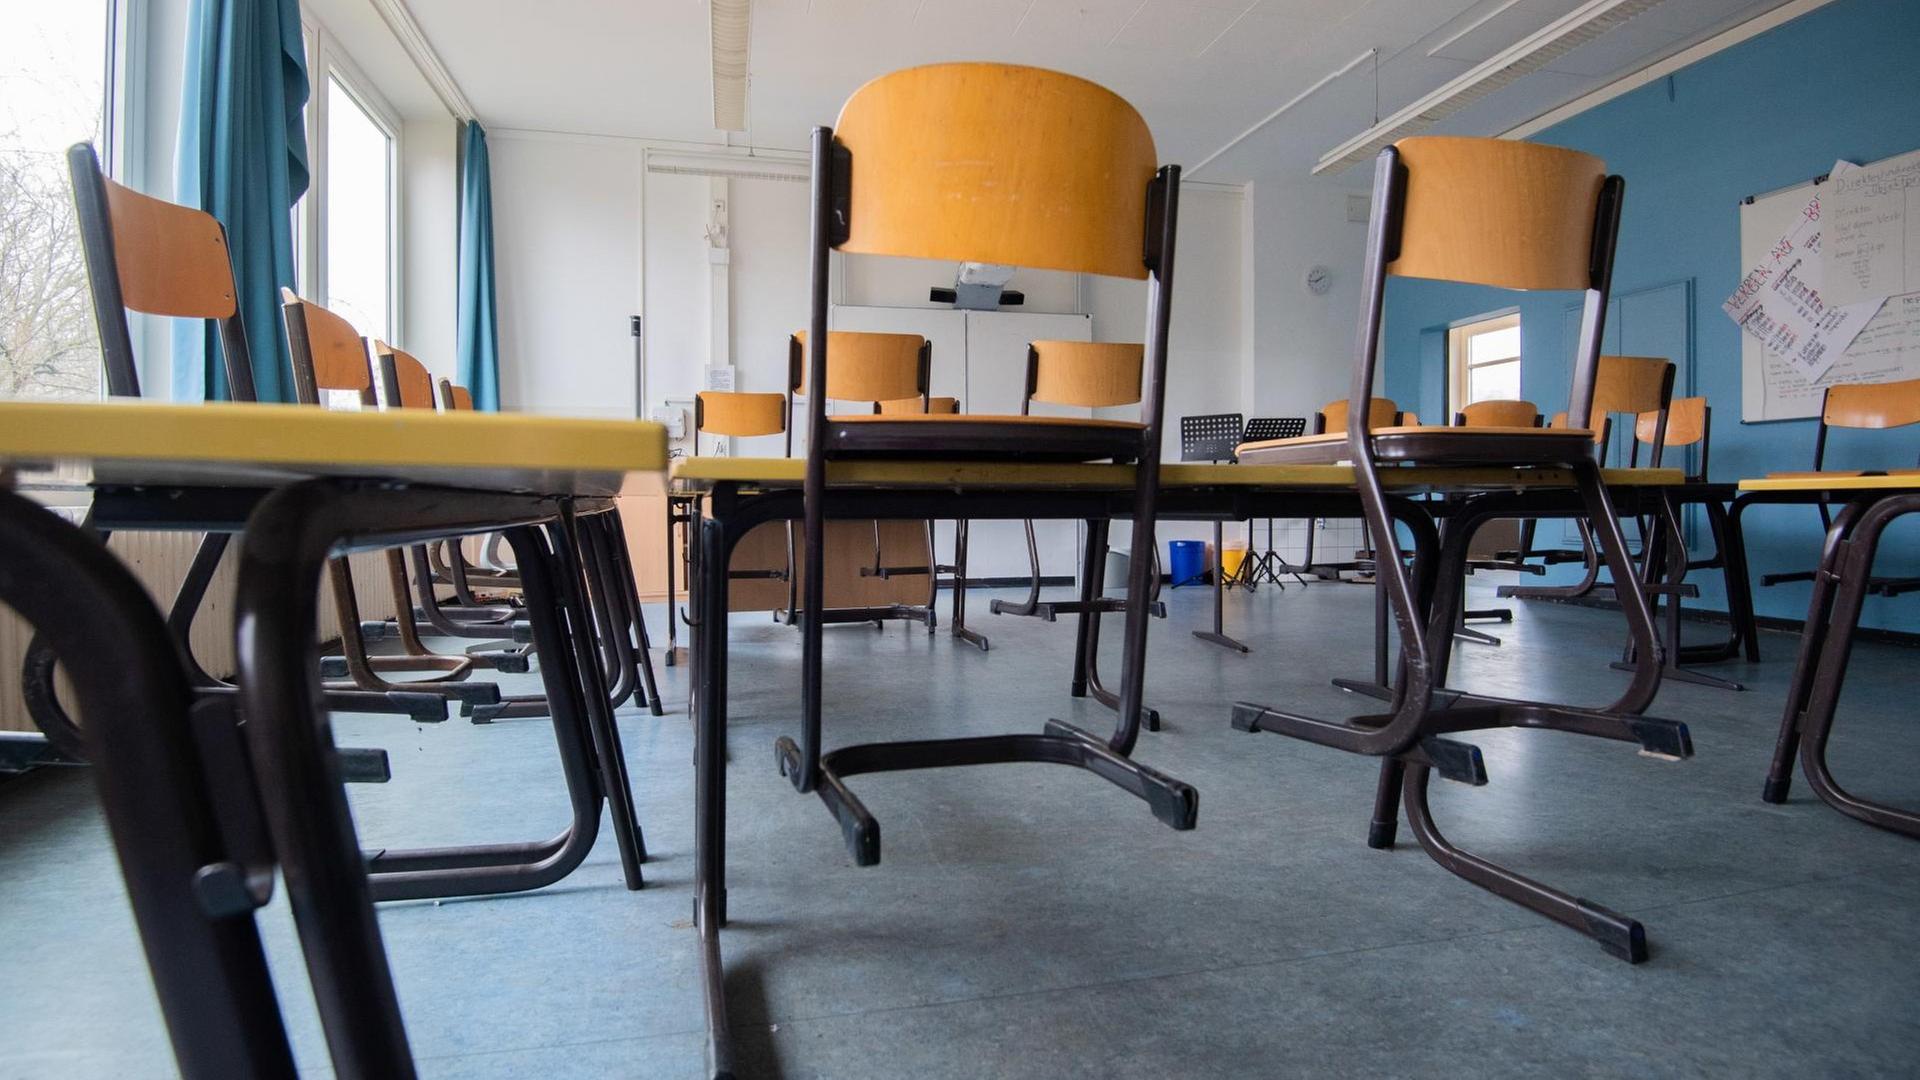 Leeres Klassenzimmer in einer Schule in Hannover